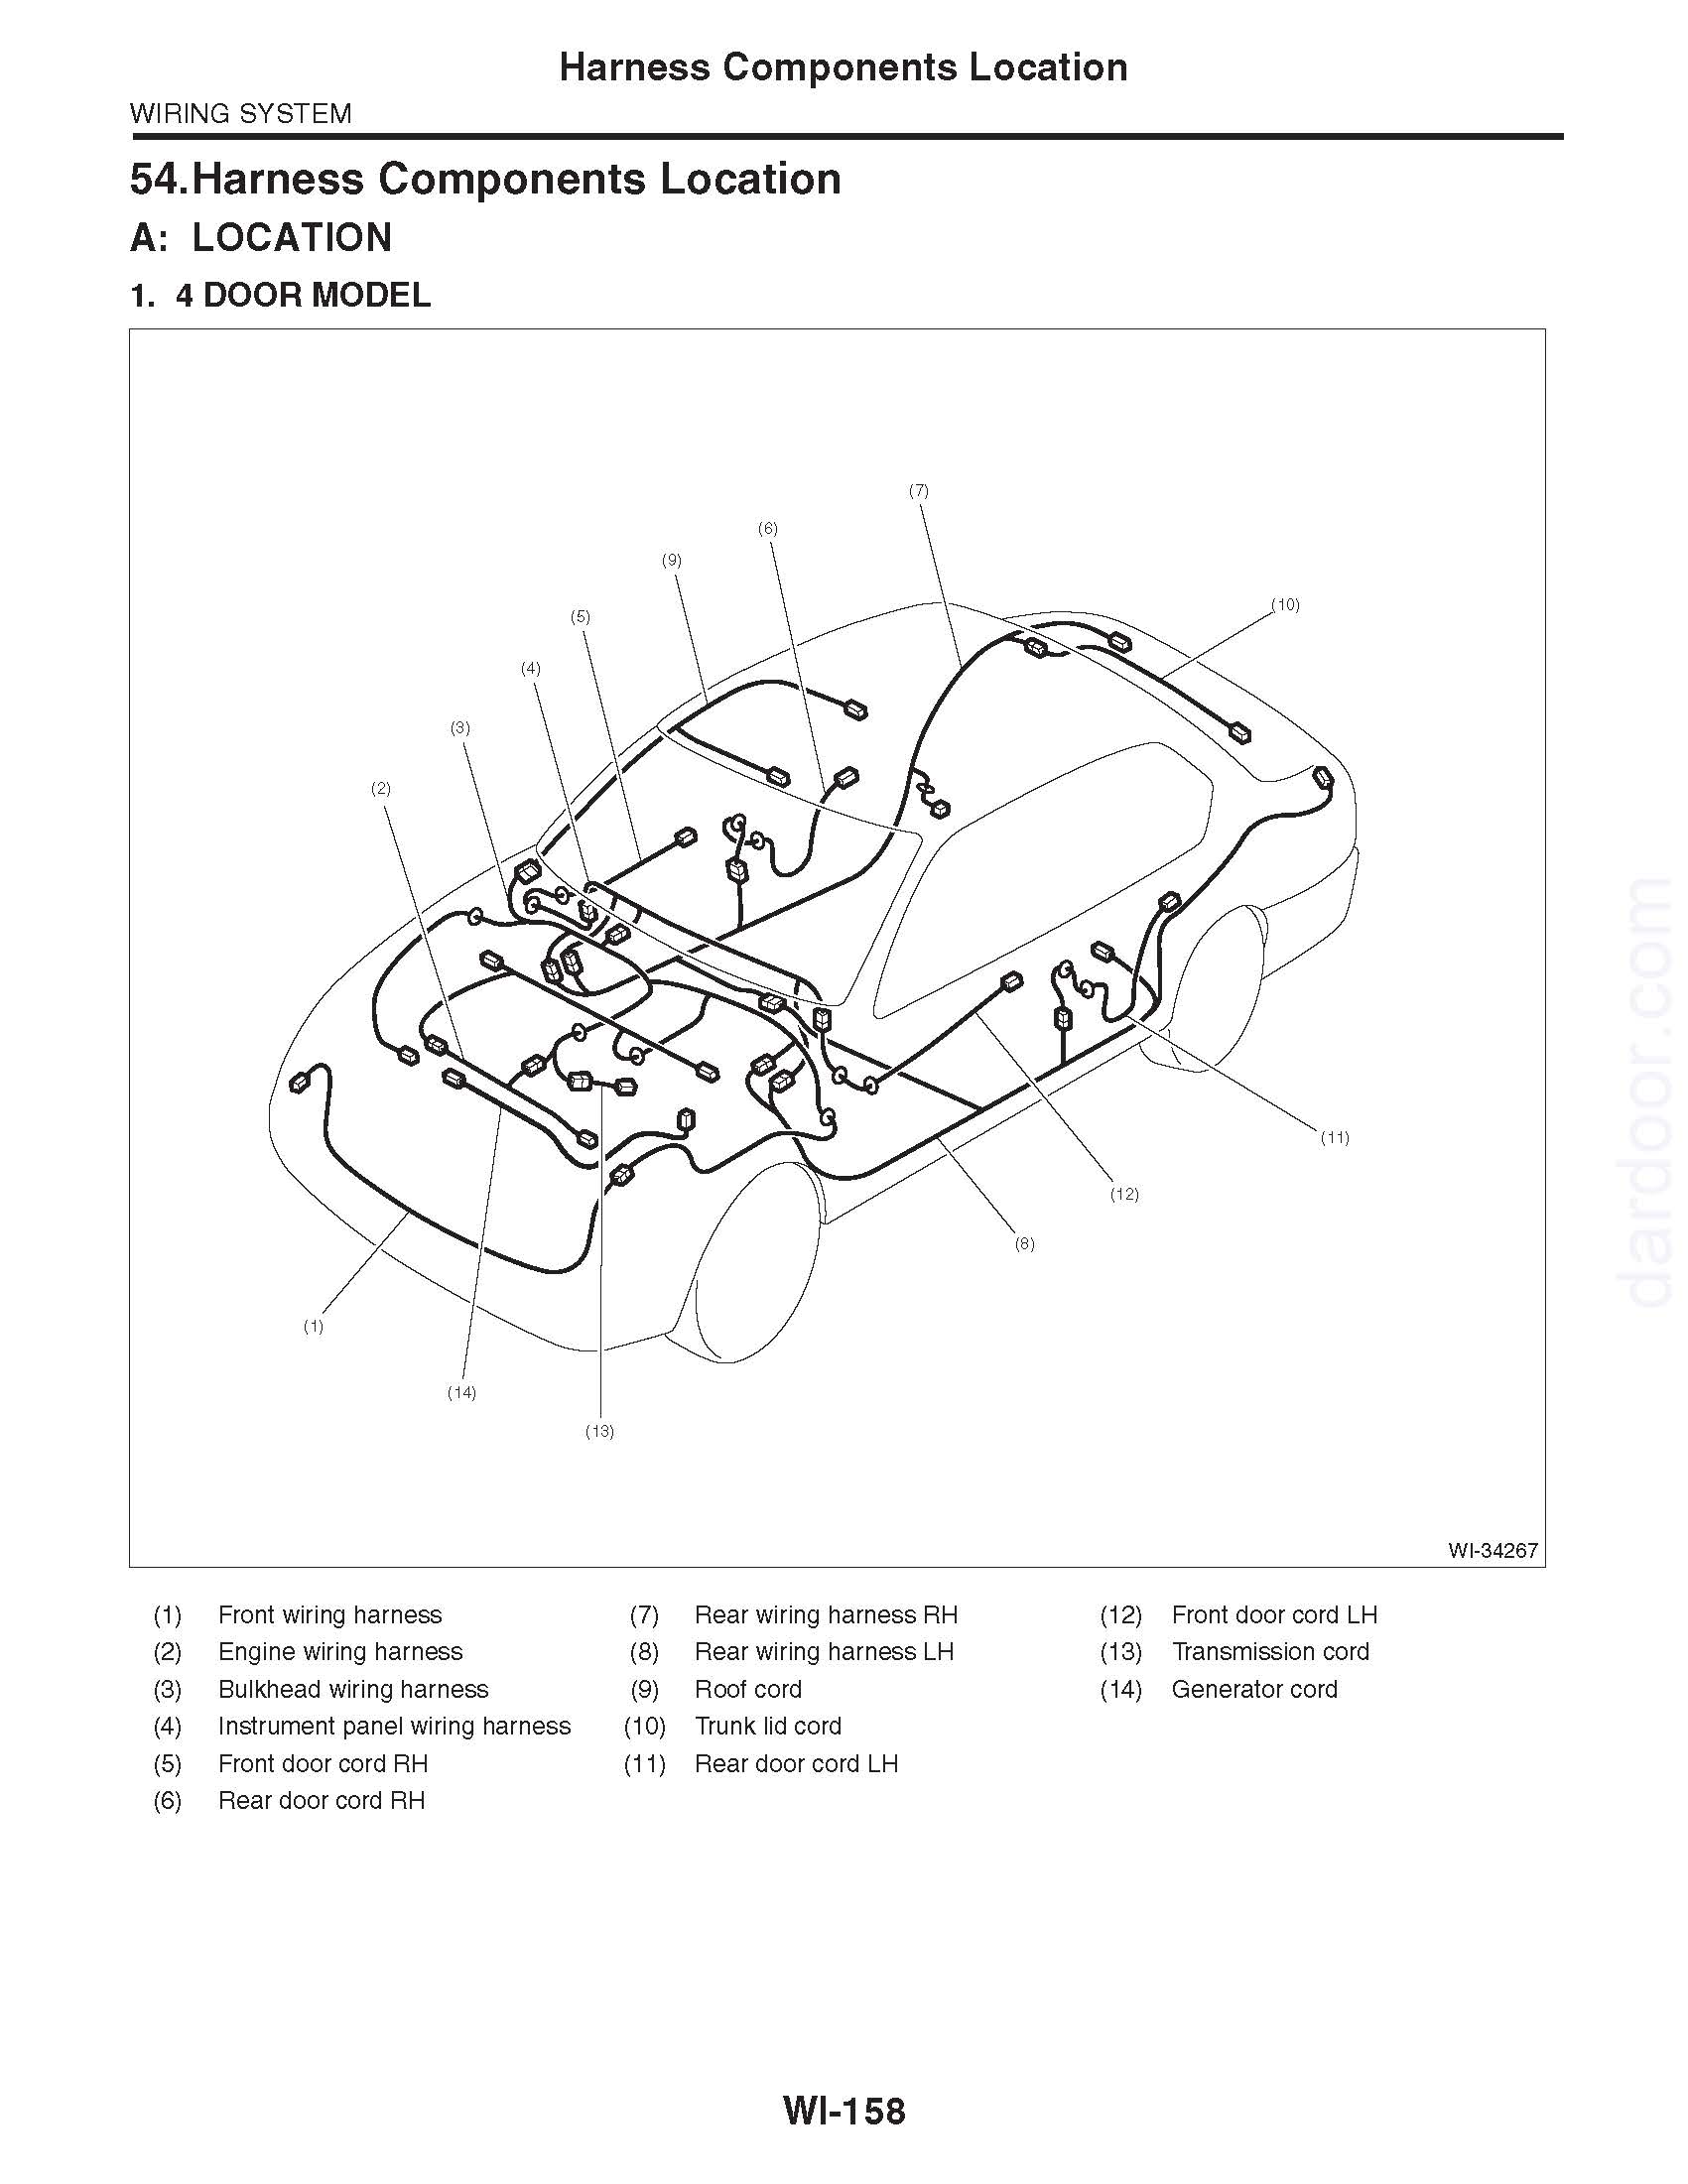 2013 Subaru Impreza XV wiring diagram, harness components location